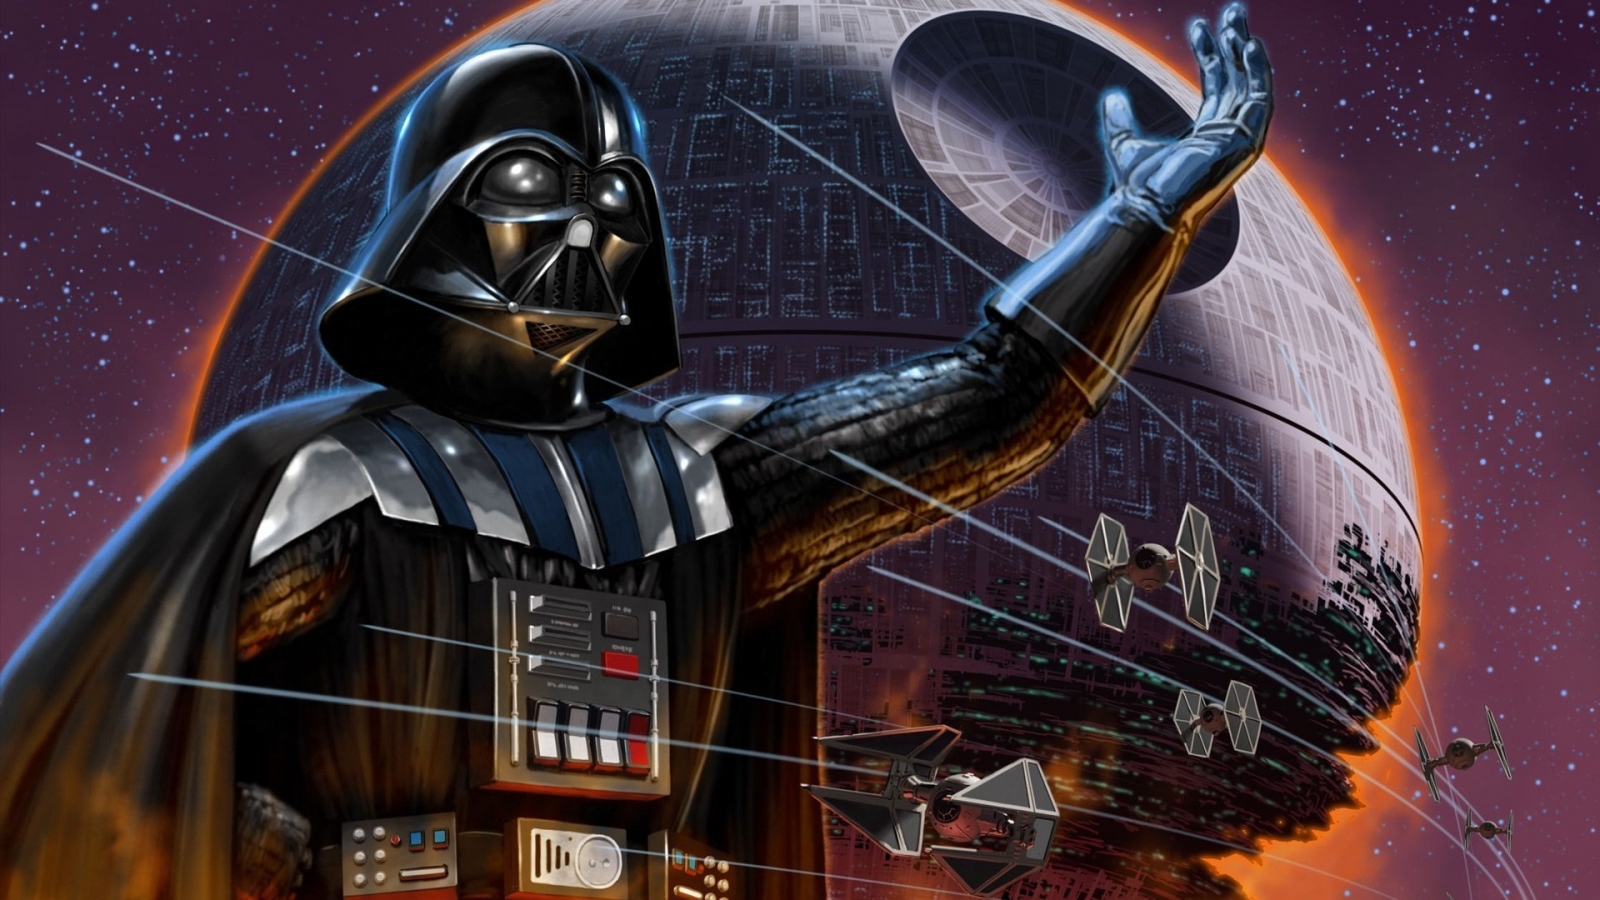 Darth Vader Star Wars Character for 1600 x 900 HDTV resolution